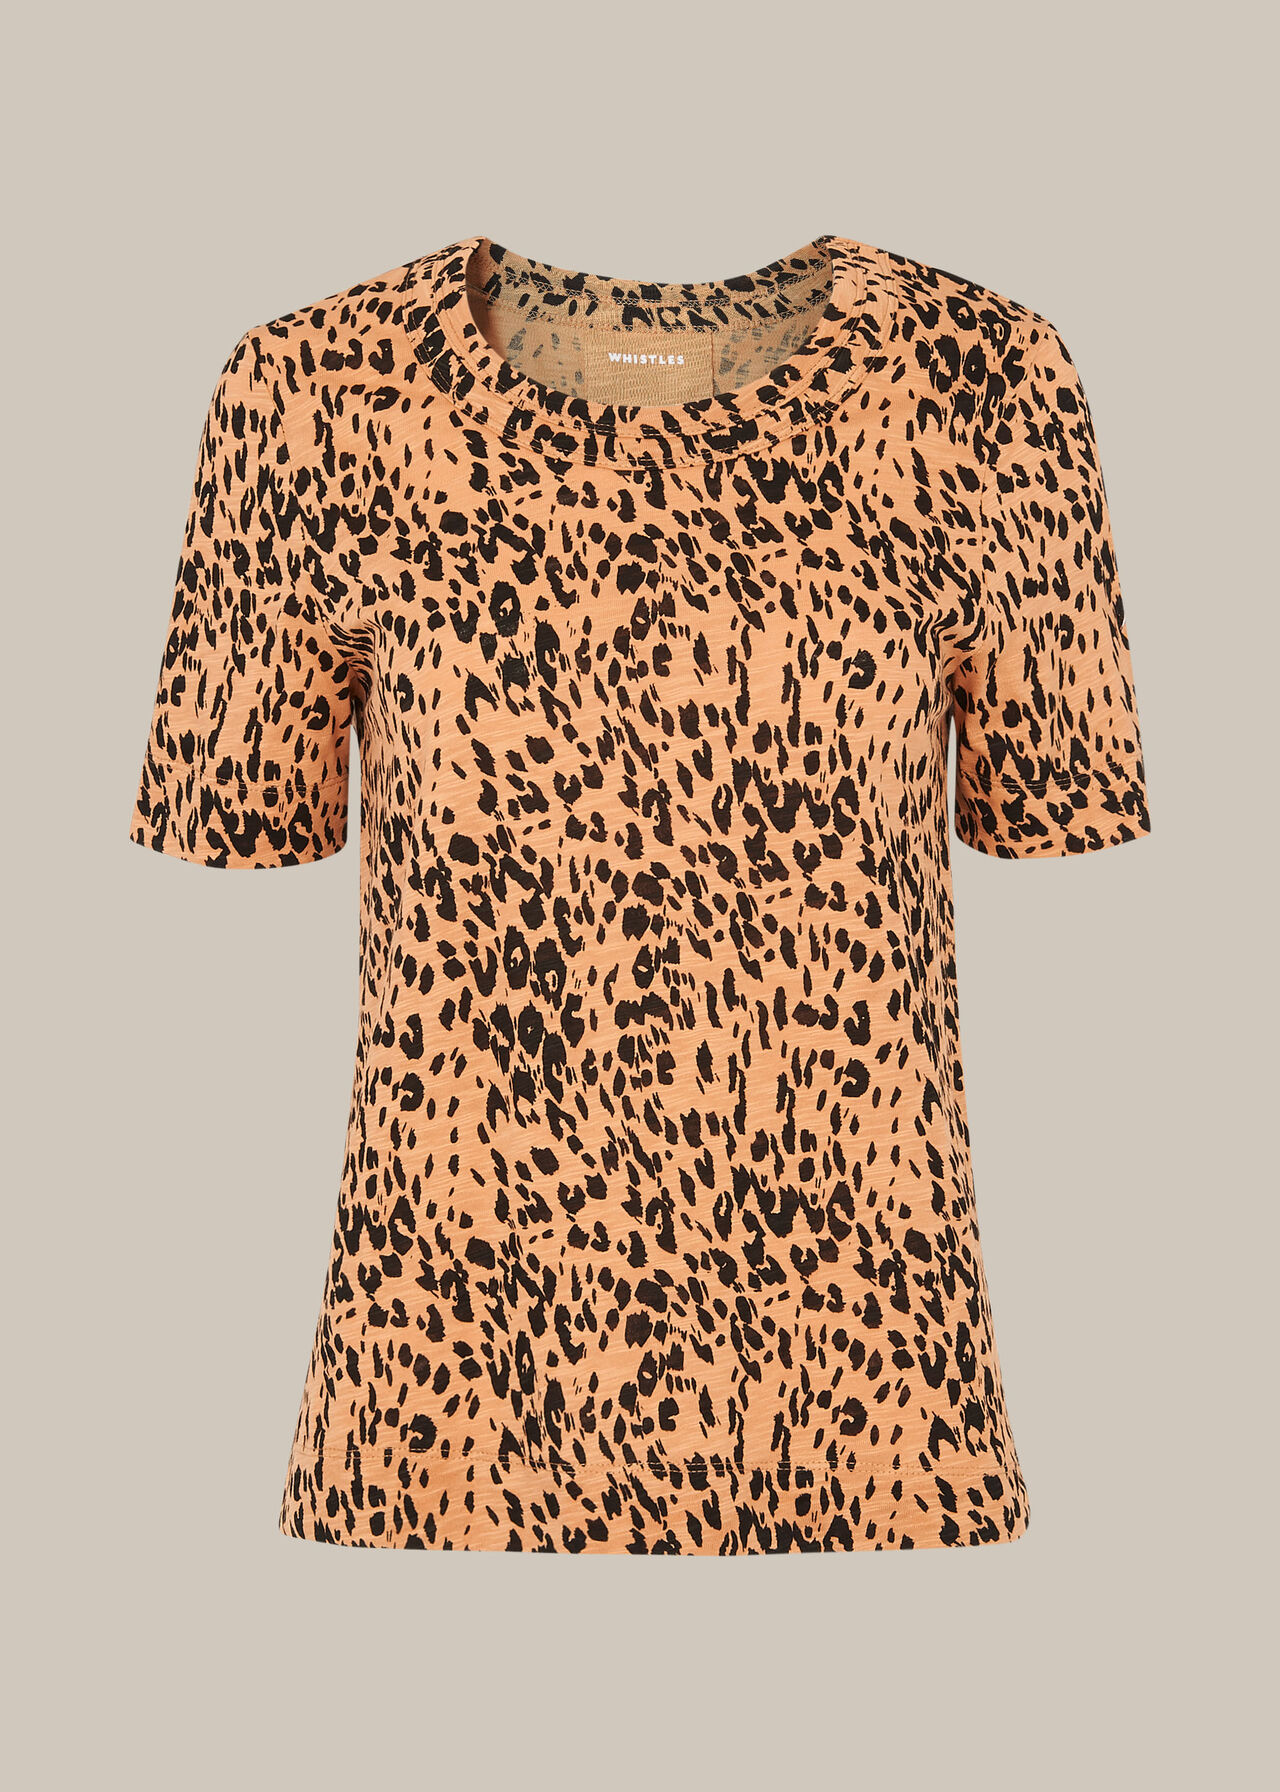 Leopard Print Safari Print Rosa Tshirt | WHISTLES | Whistles UK